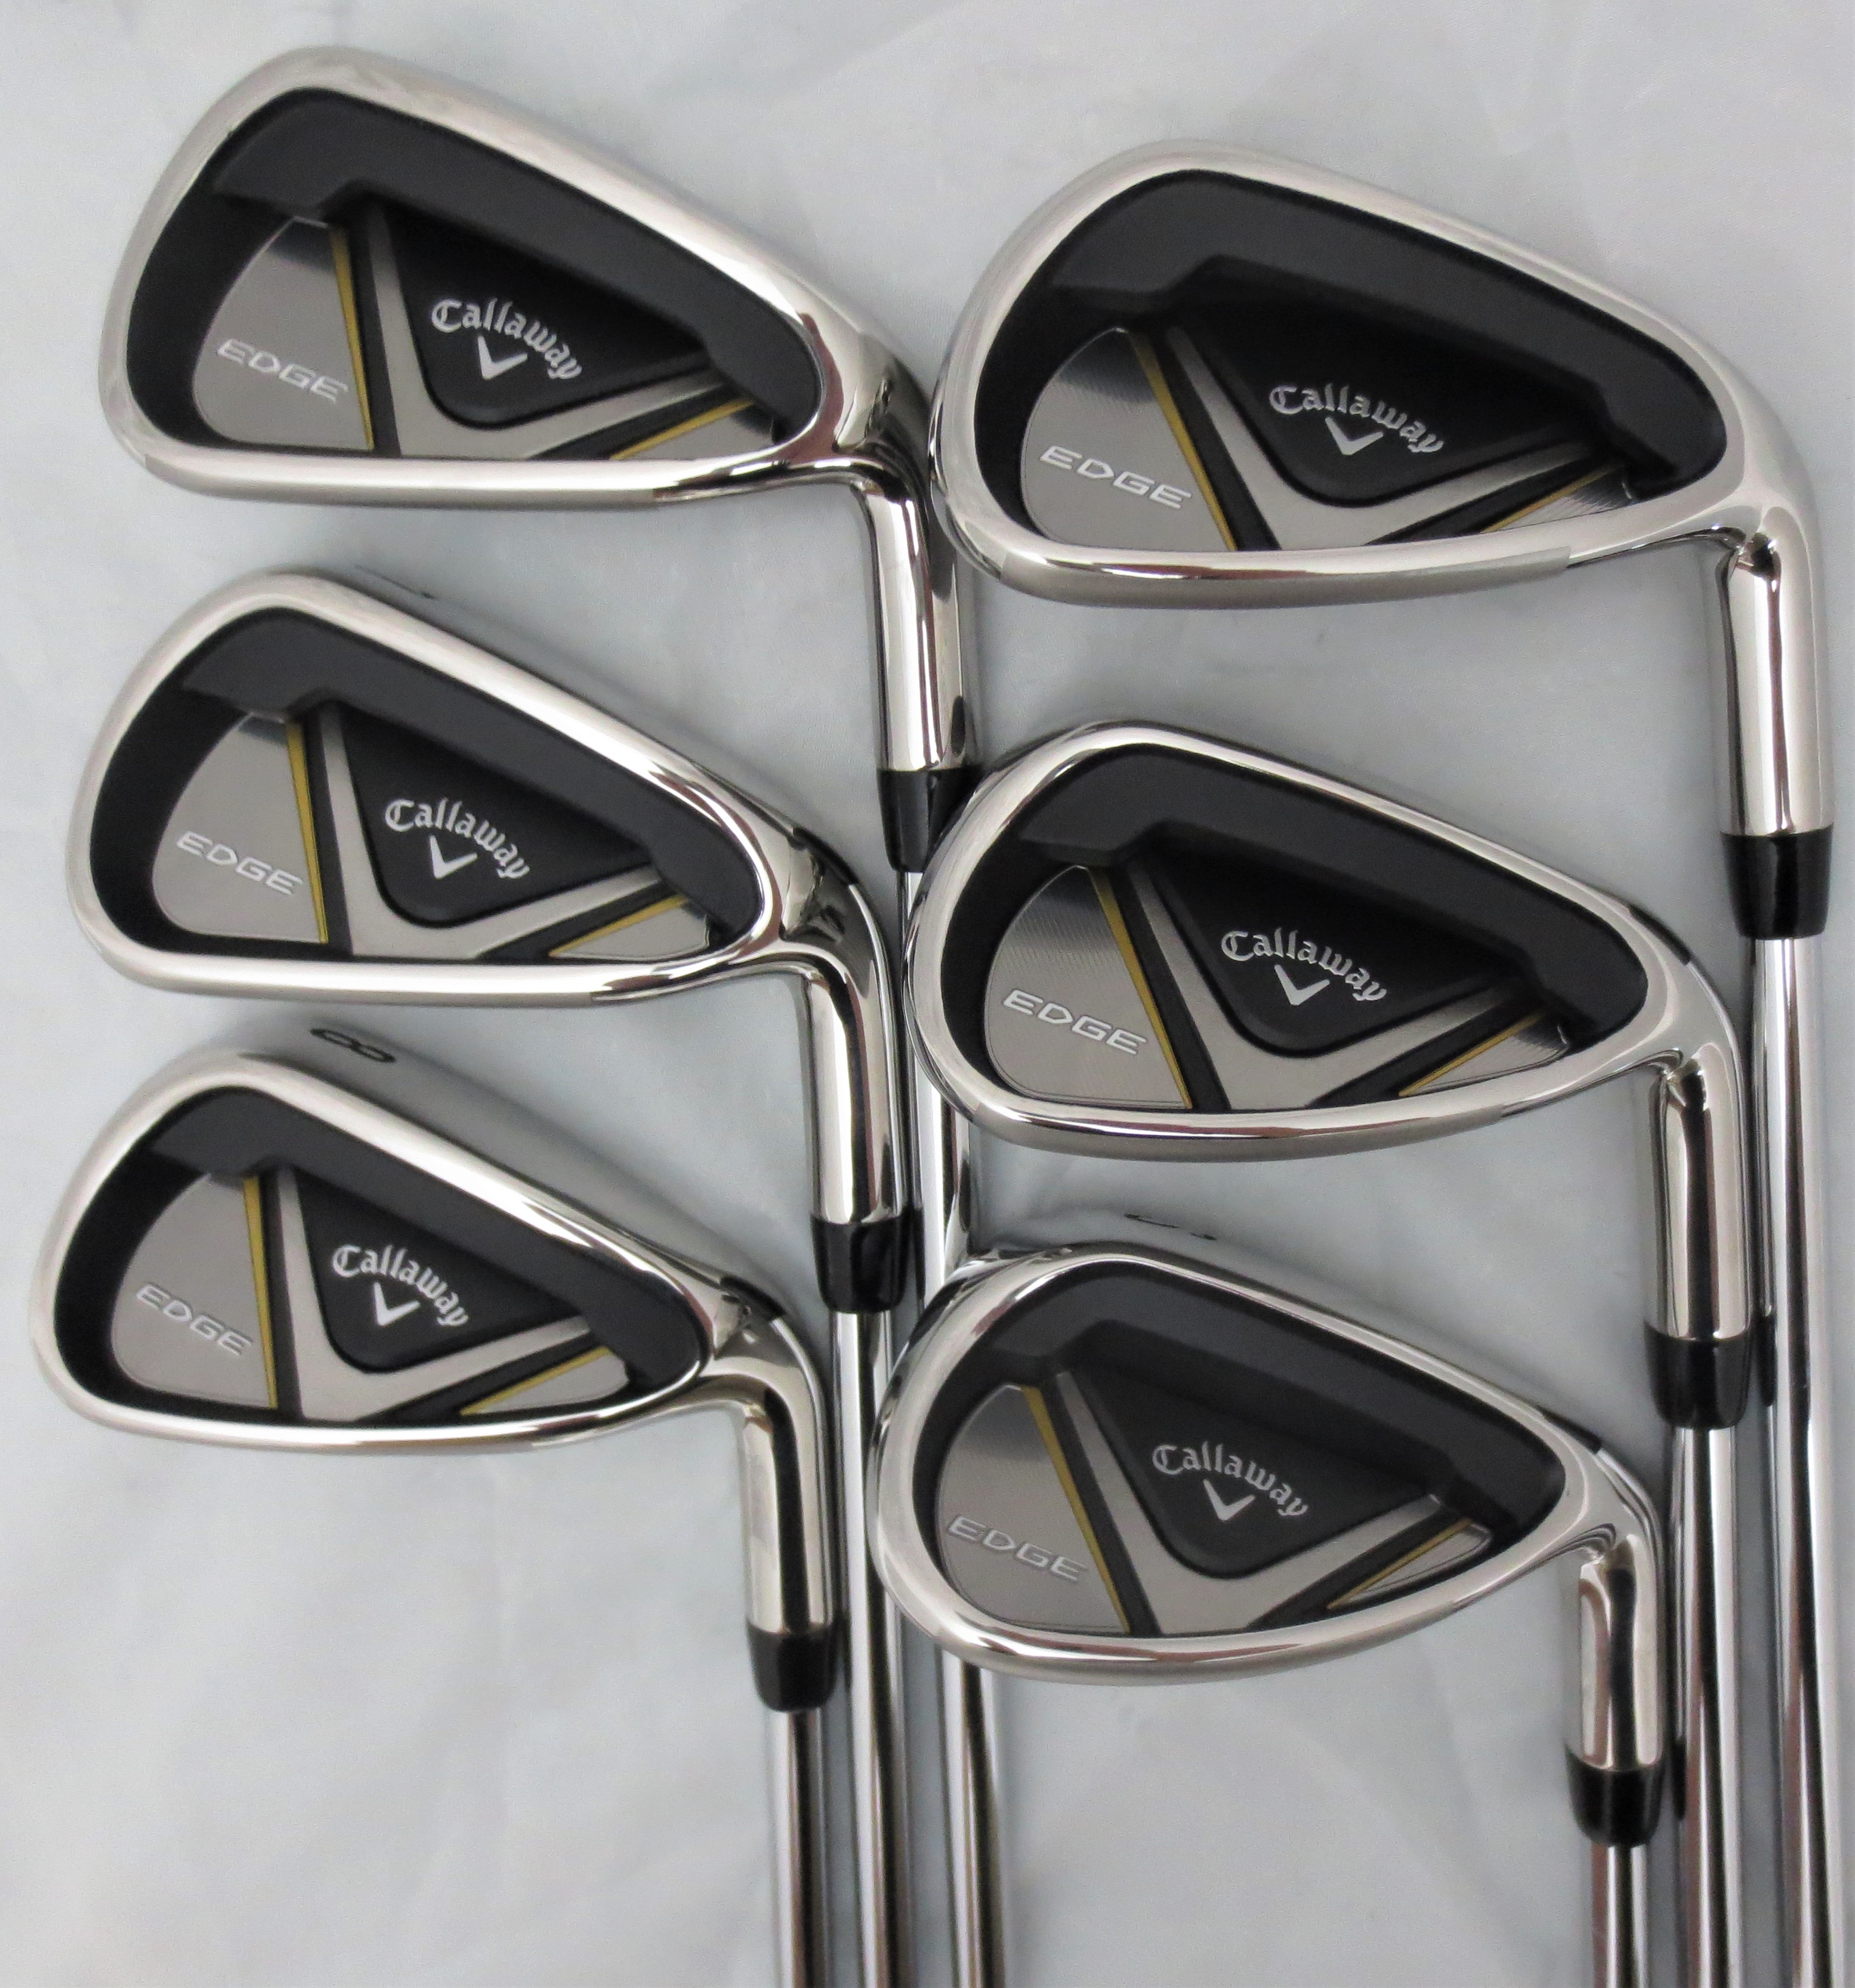 Callaway Complete Mens Golf Set Clubs Driver, Fairway Wood, Hybrid, Irons, Putter, Bag Stiff Flex Shafts - image 3 of 8